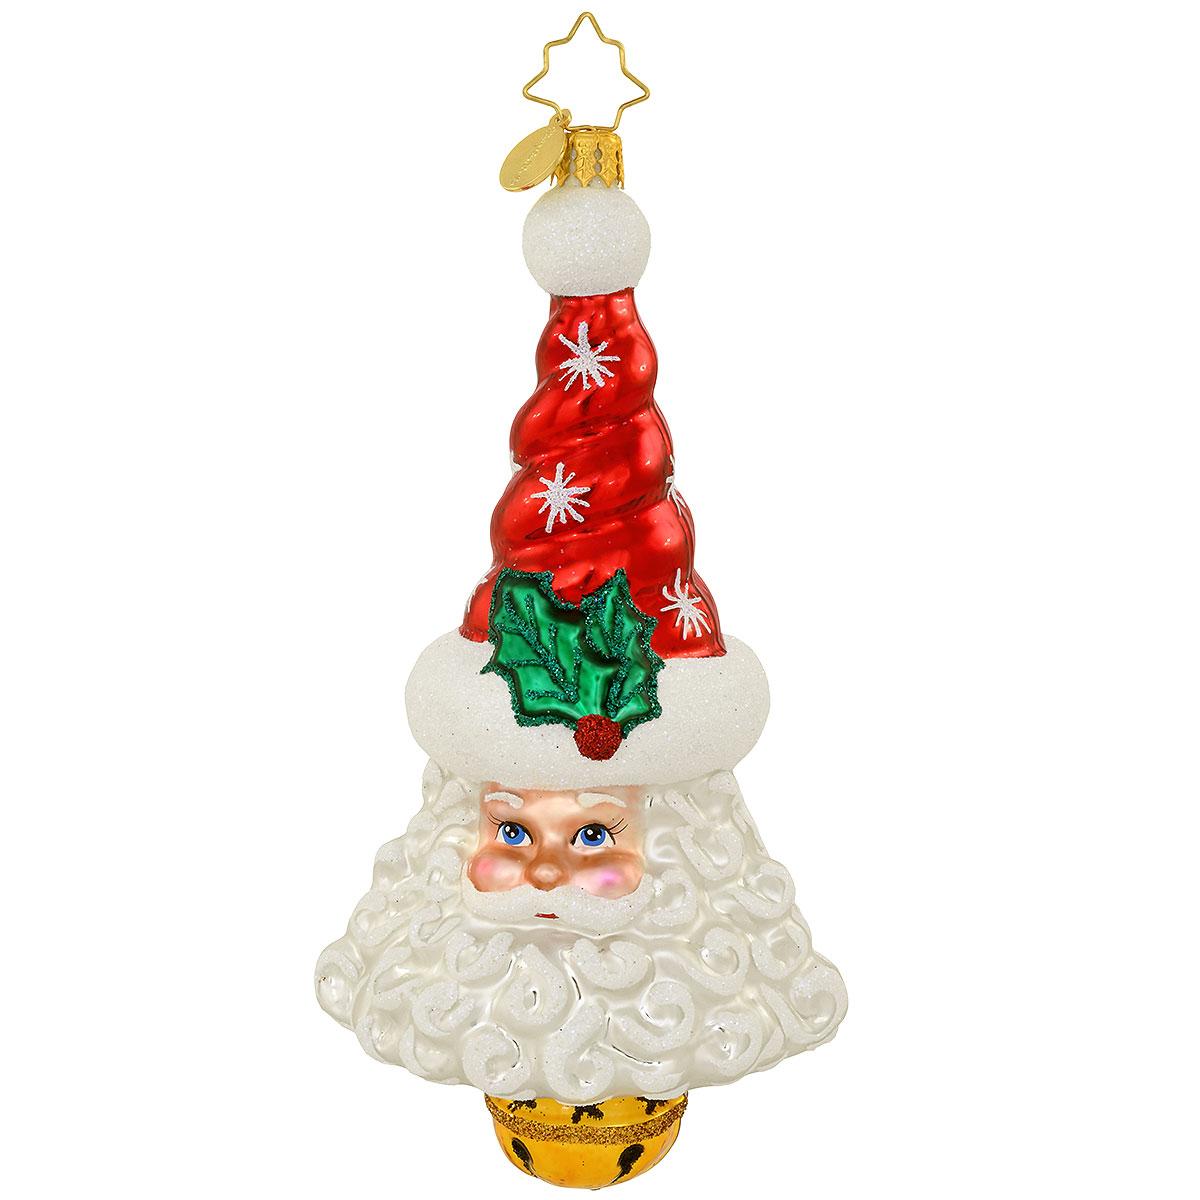 Sleigh Bell Santa Radko Ornament